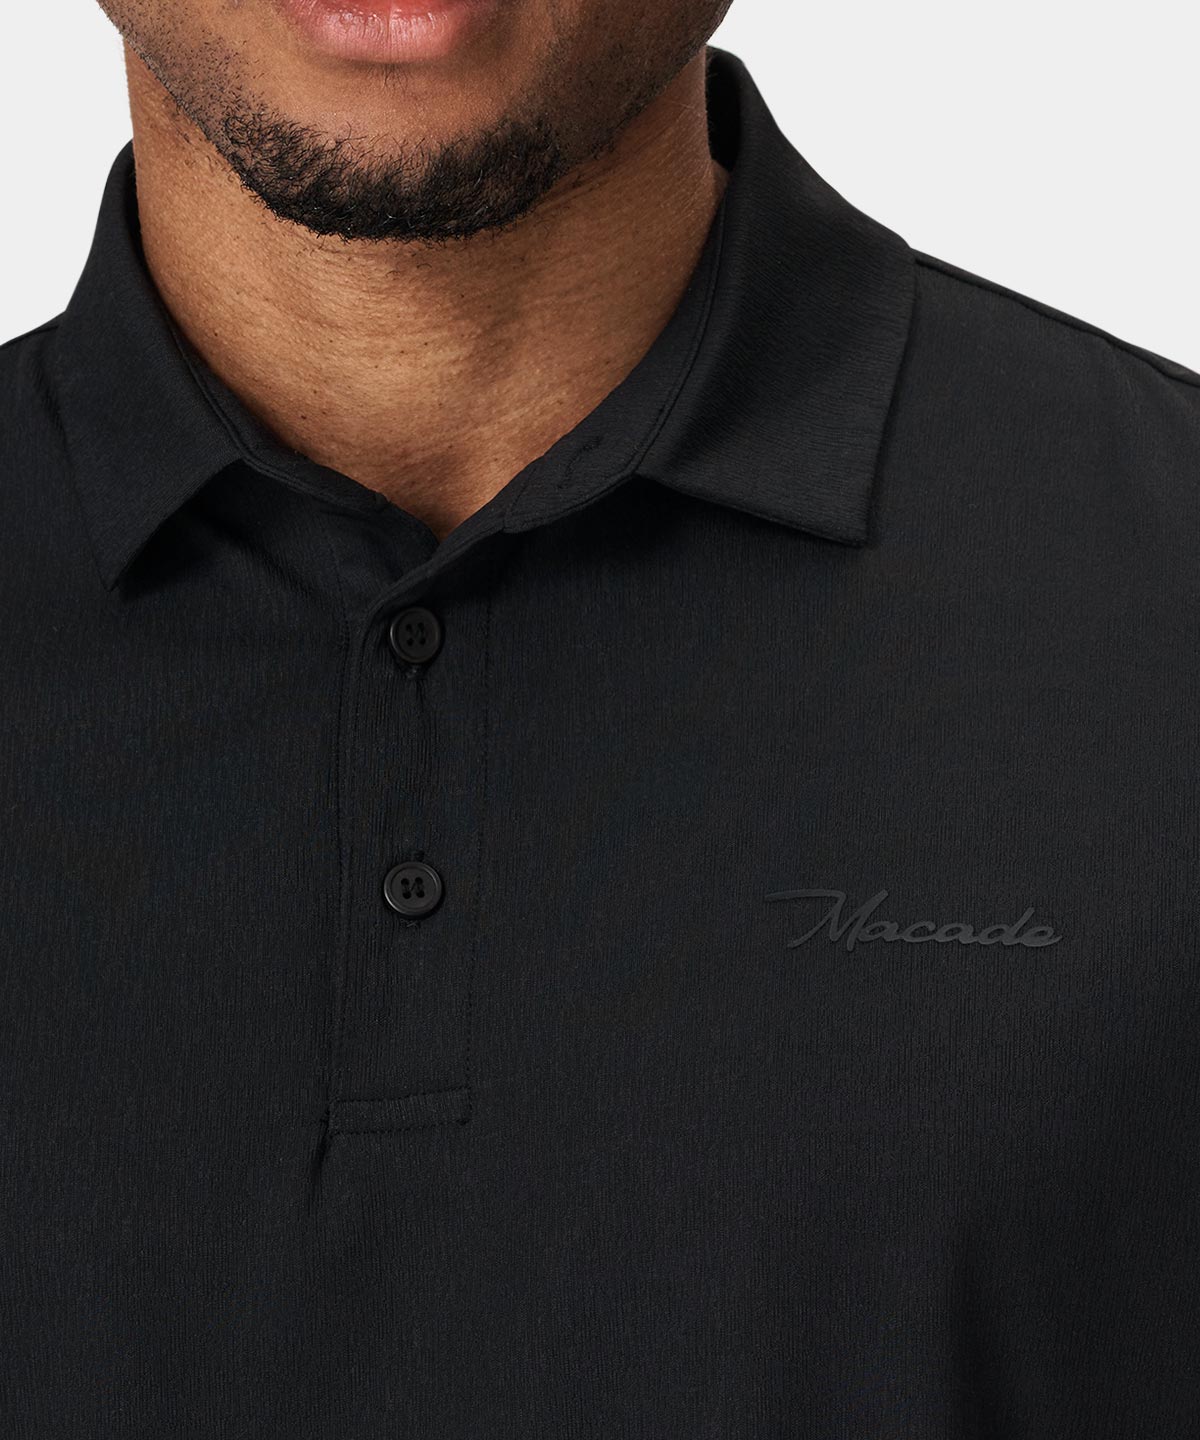 Tate Black AR Shirt Macade Golf